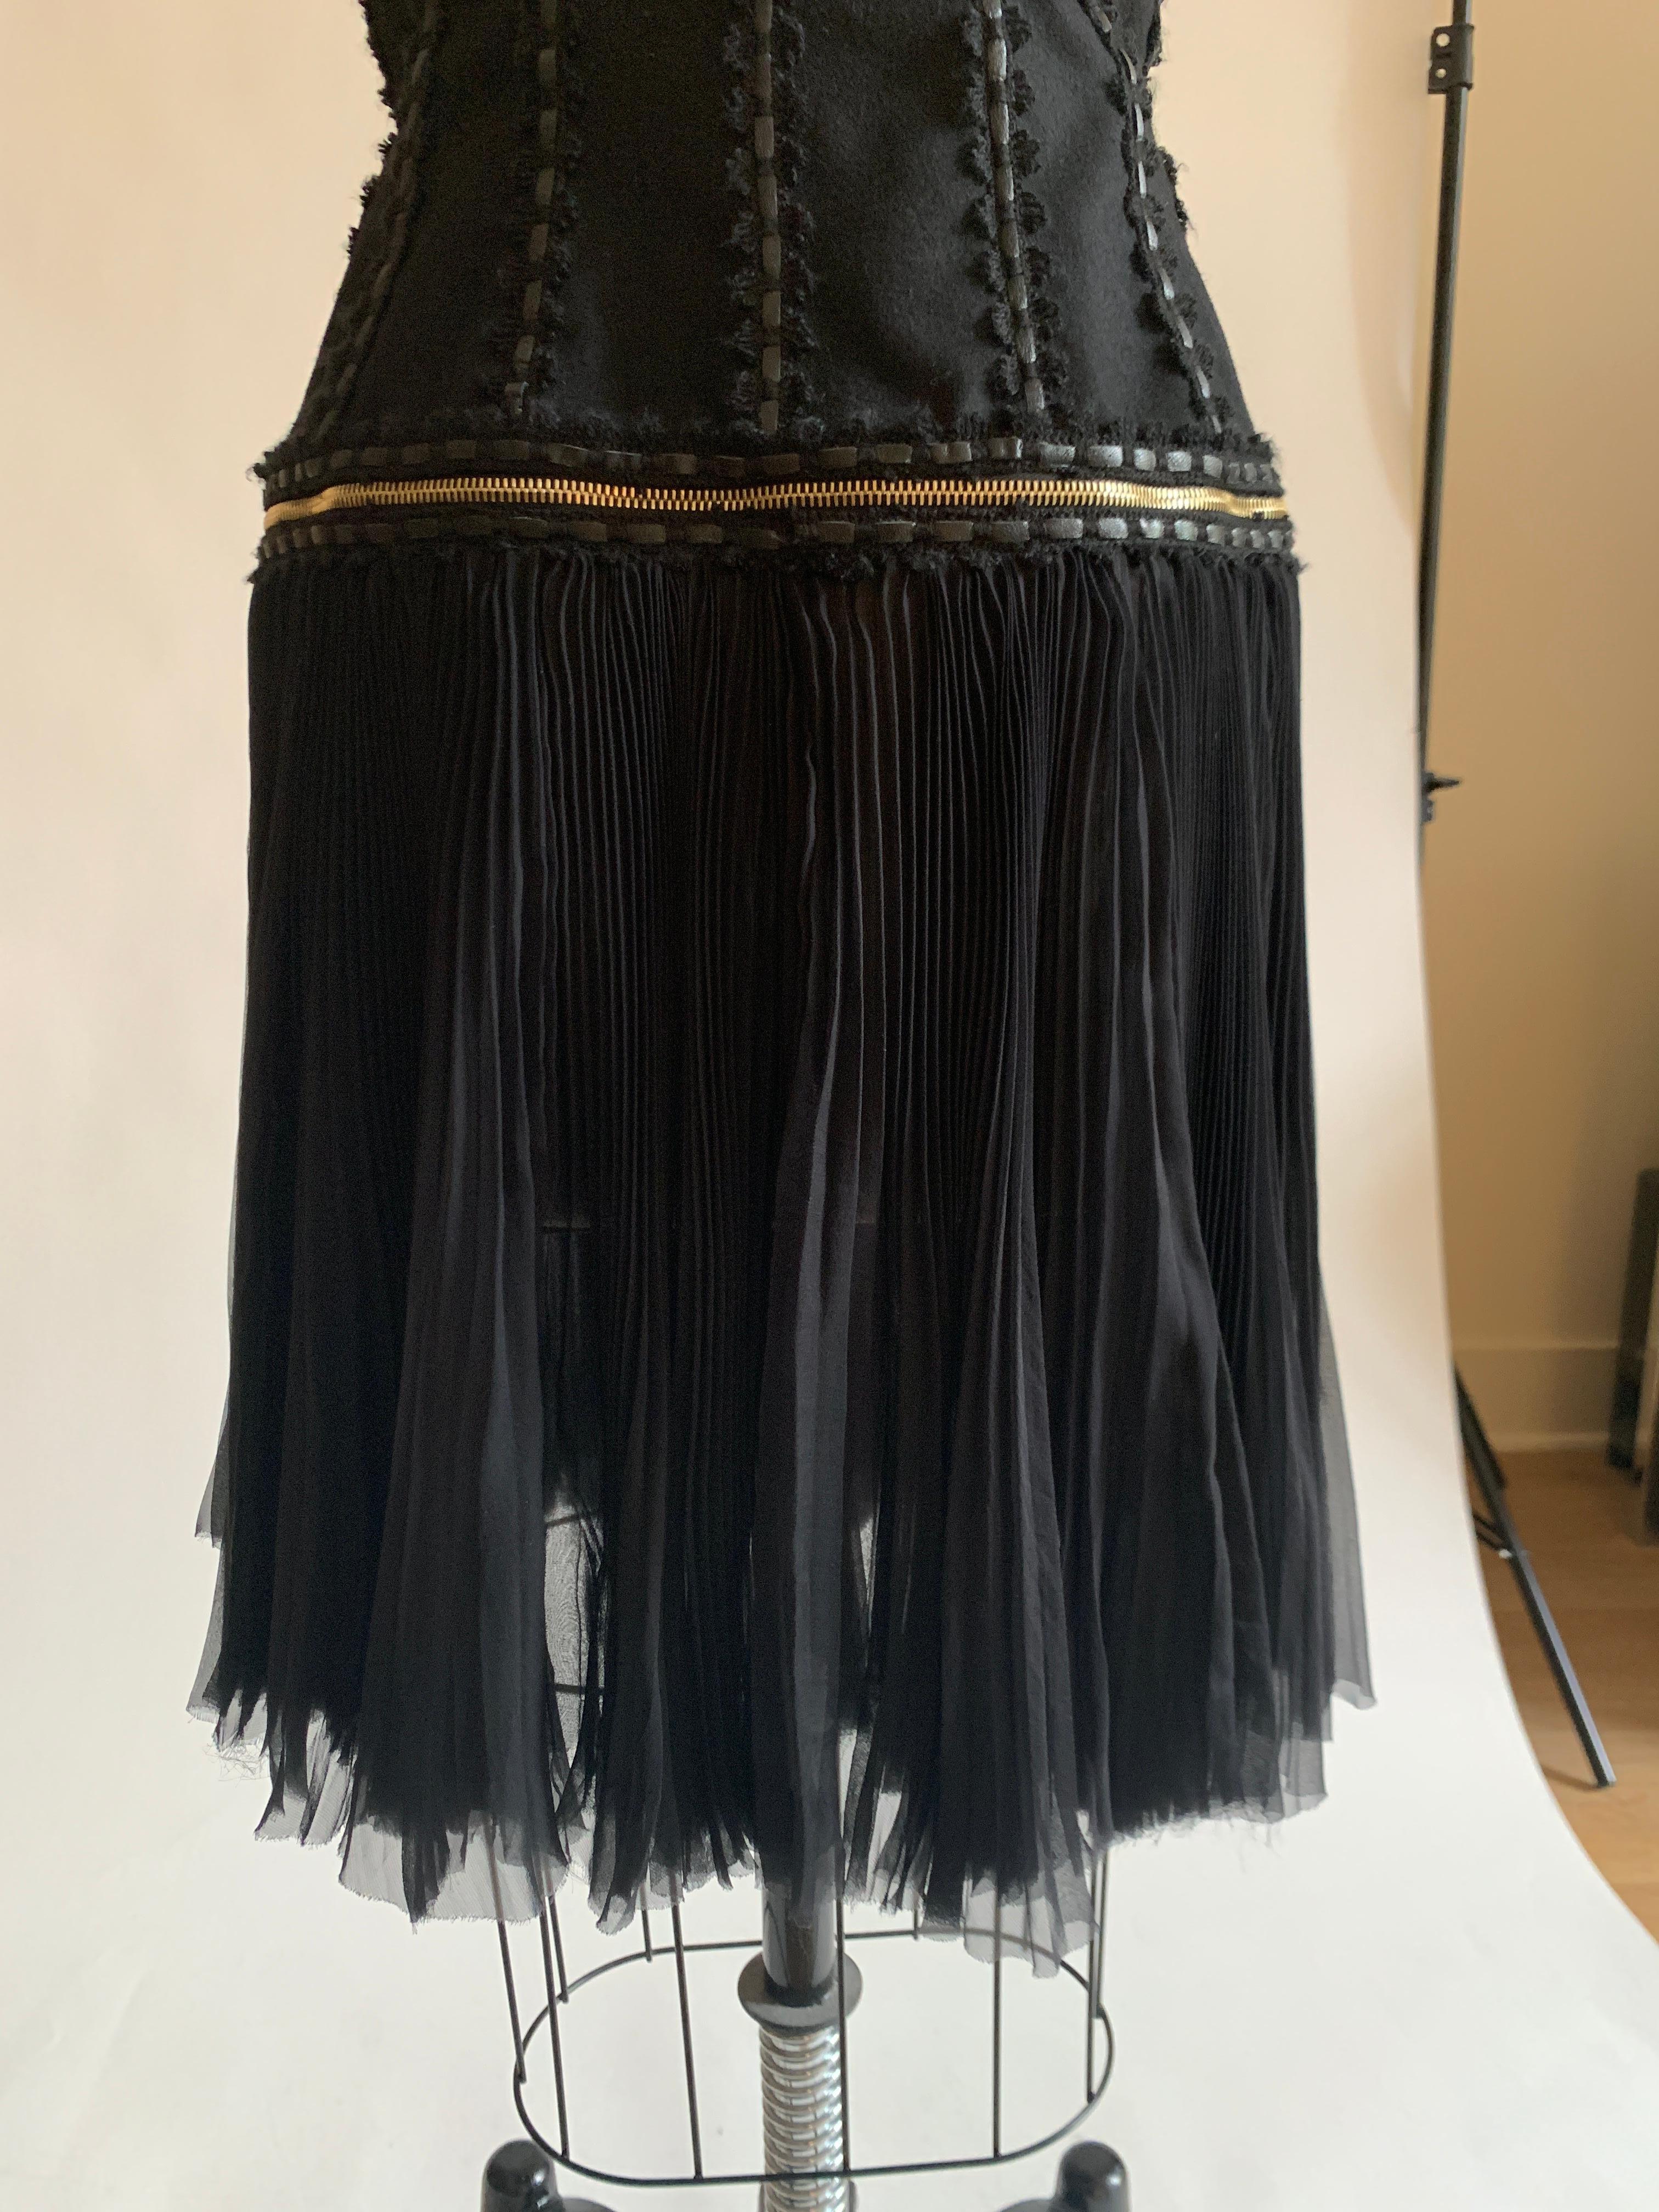 Alexander McQueen 2003 Convertible Lock and Key Dress in Black Wool Silk 3